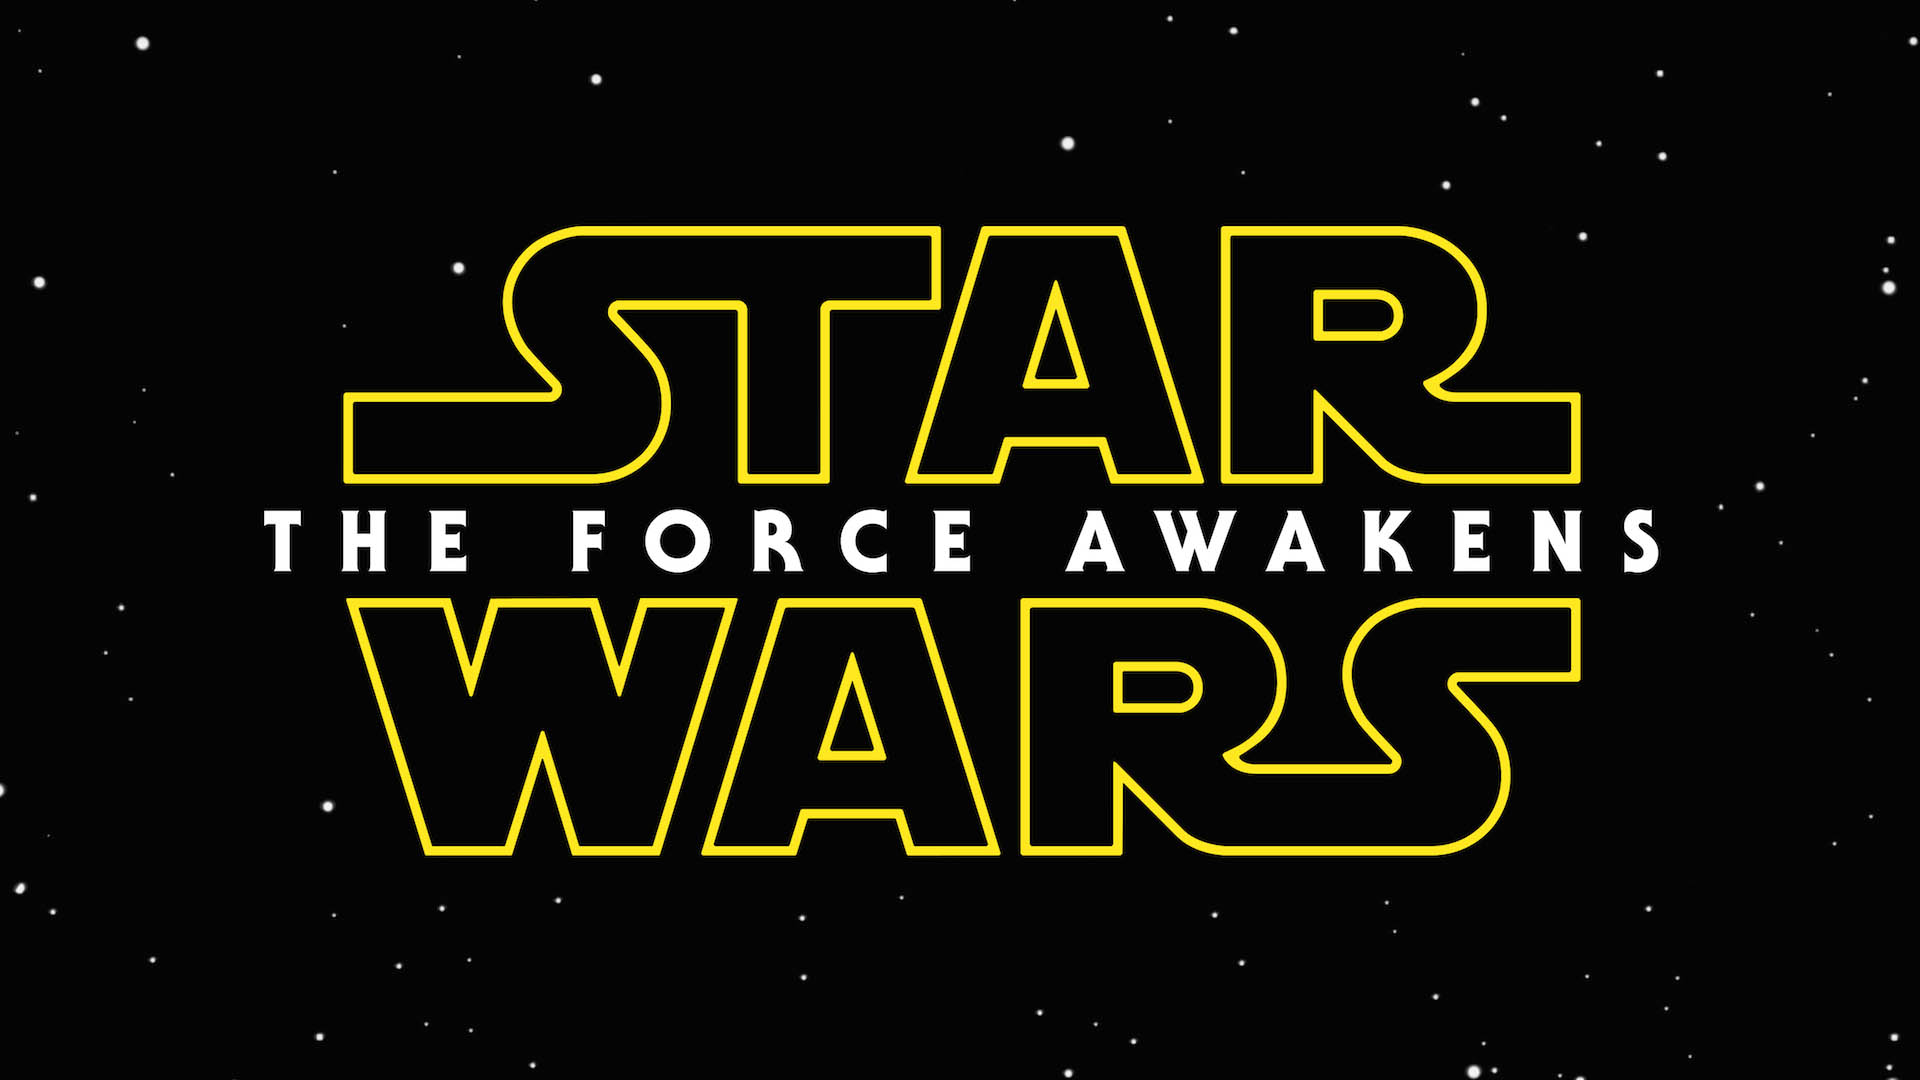 Star Wars The Force Awakens Logo Full HD